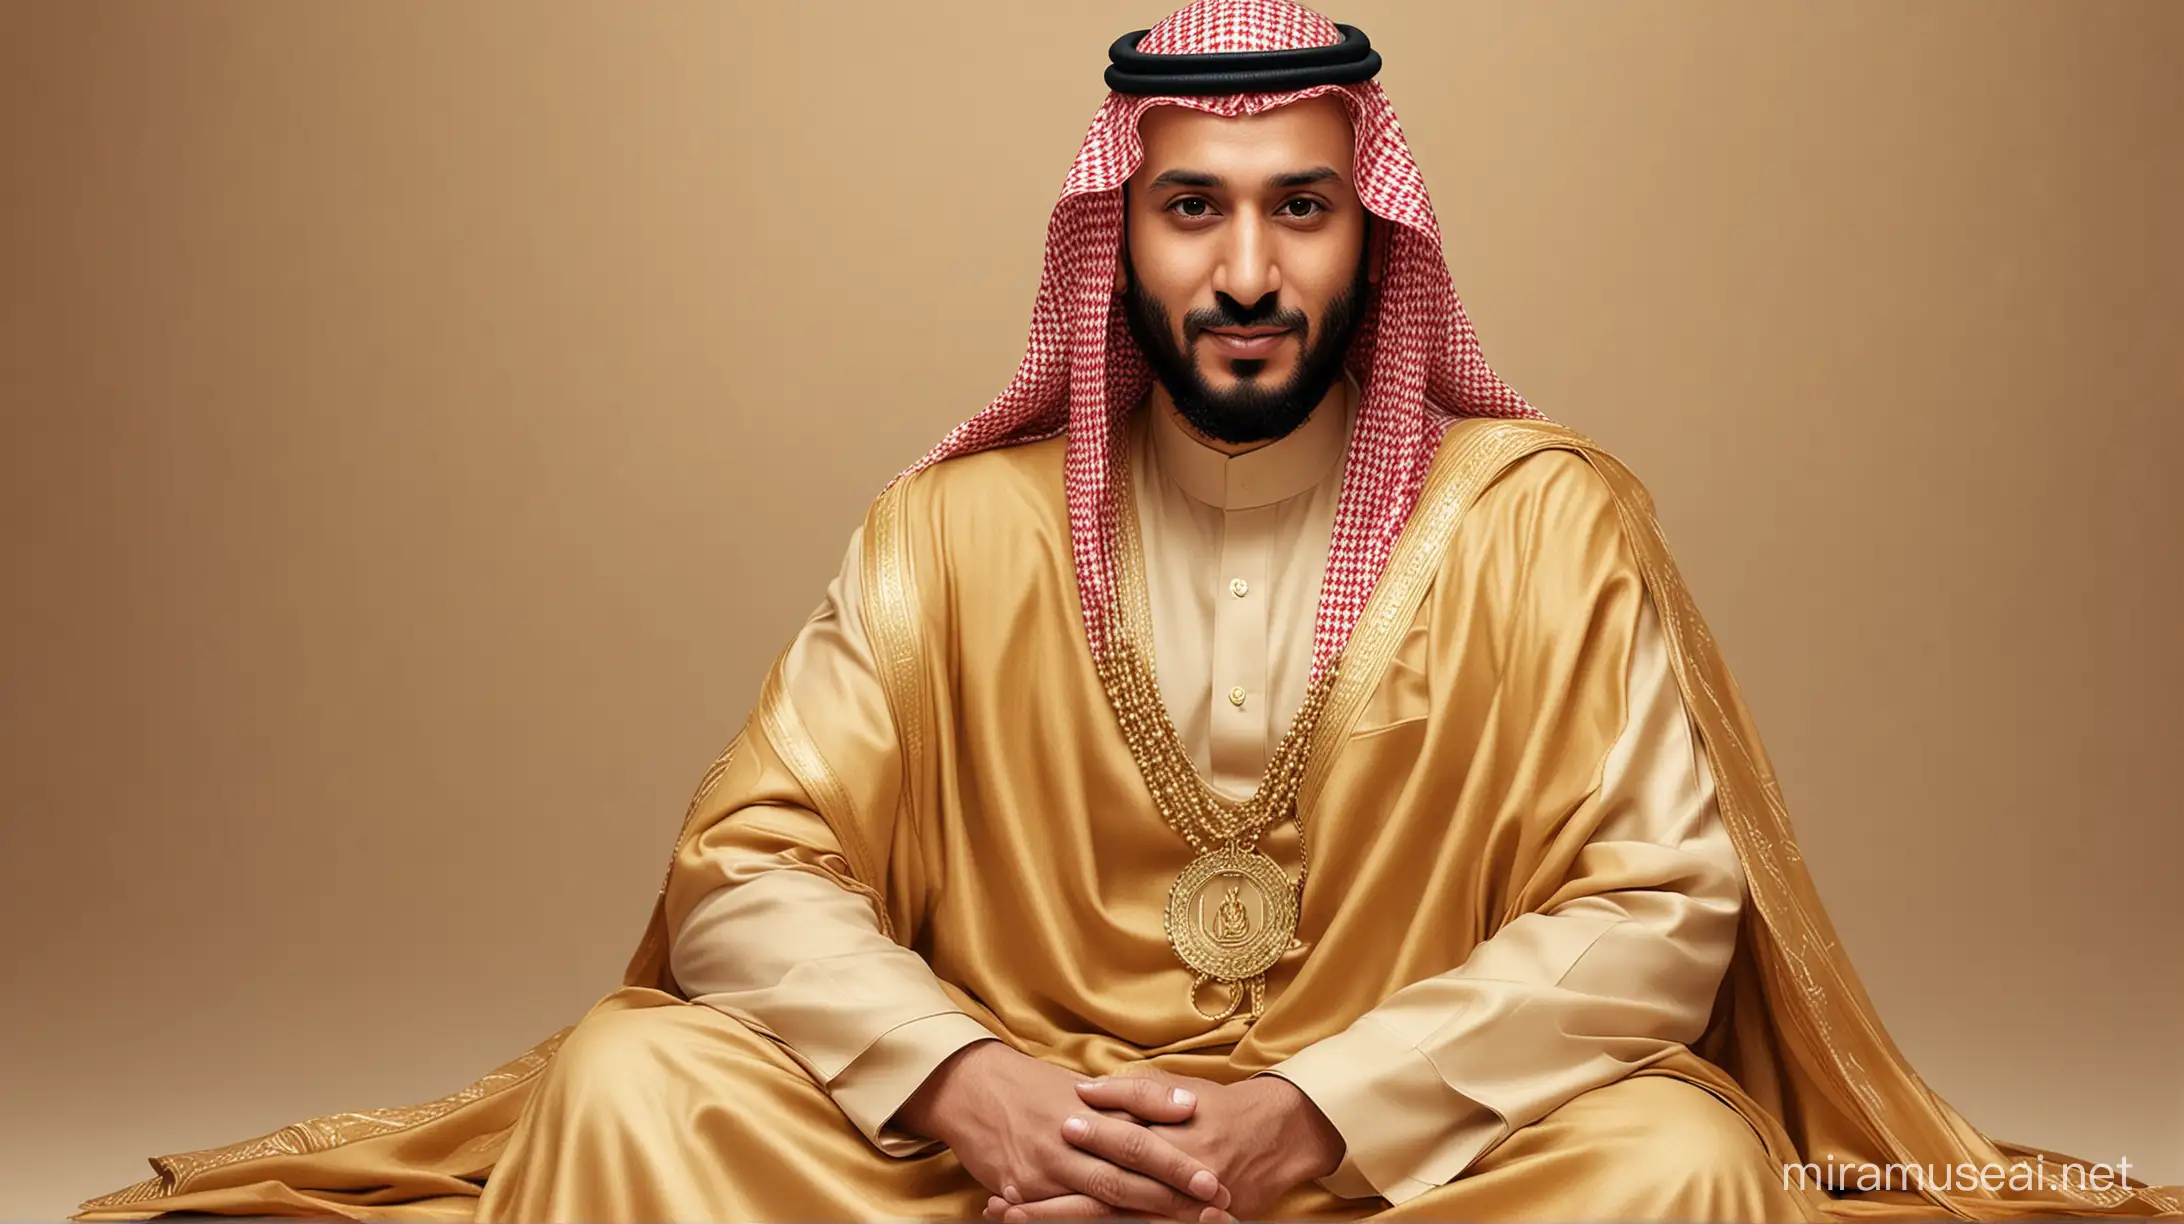 Mohammed bin Salman Al Saud sitting on gold